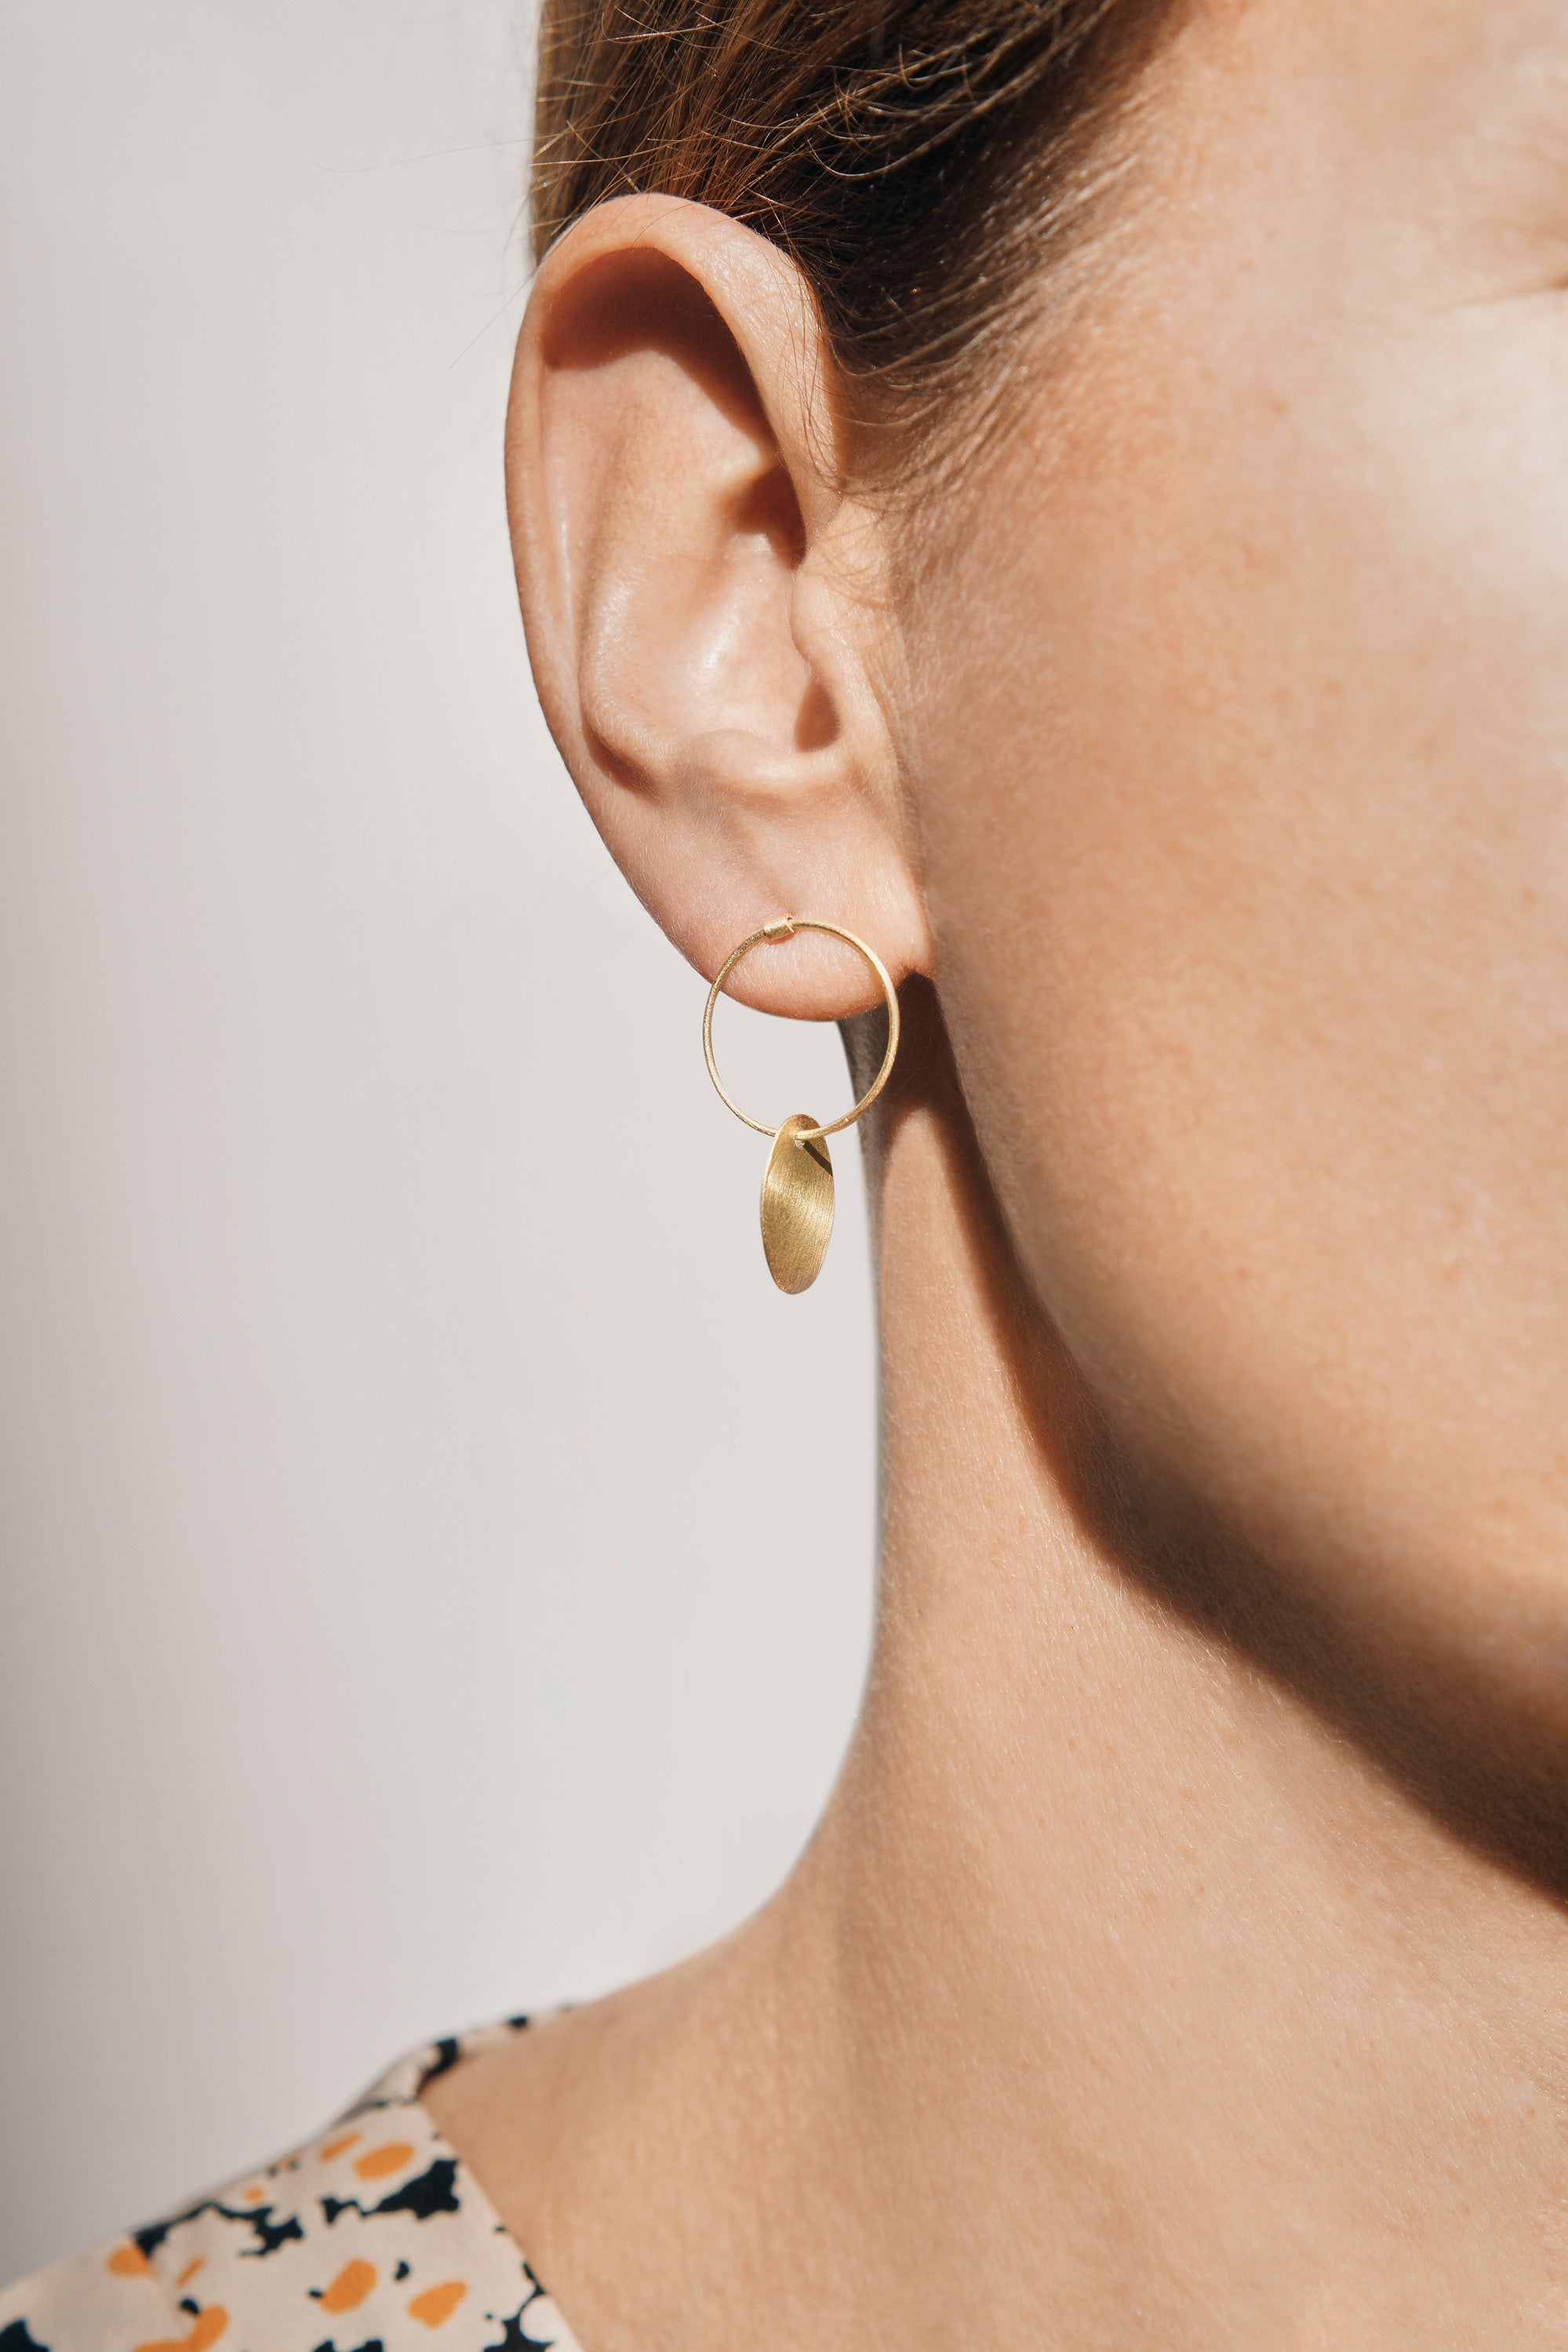 18KT yellow gold hanging earrings worn by a female ear - Pieno Vuoto 4E